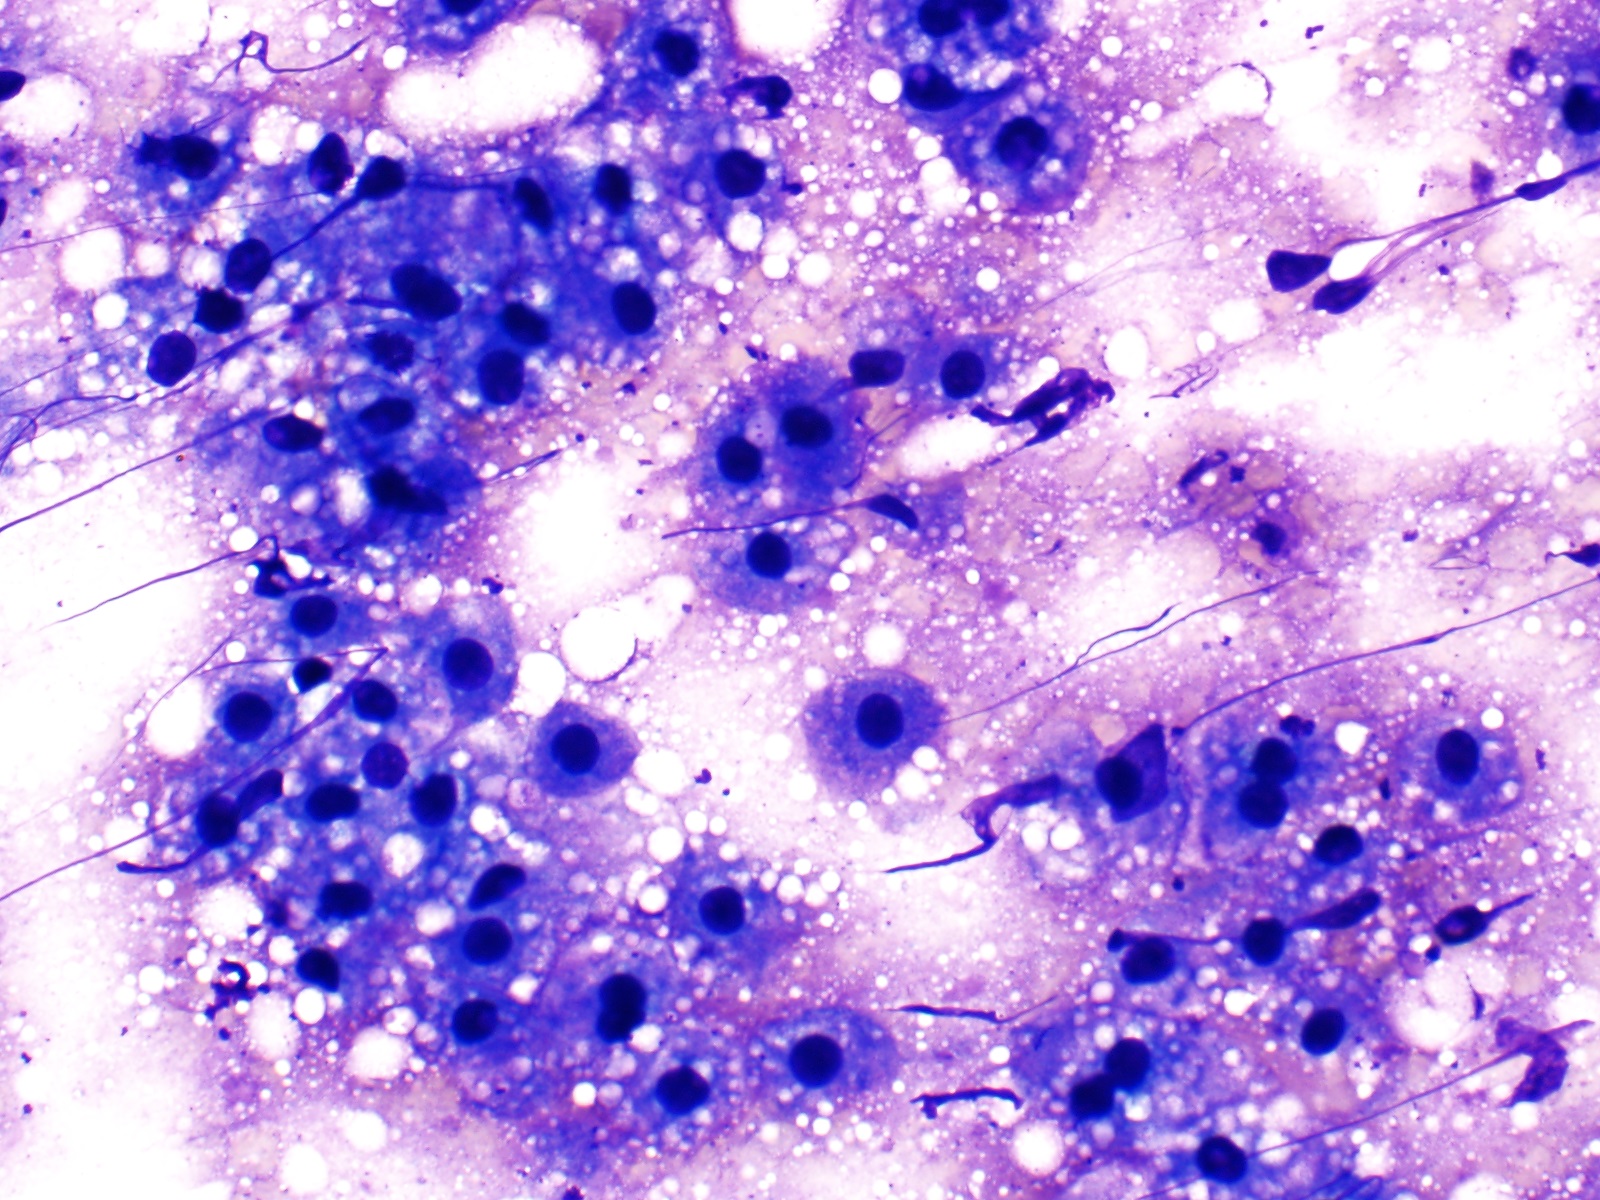 Benign hepatocytes, Diff-Quik